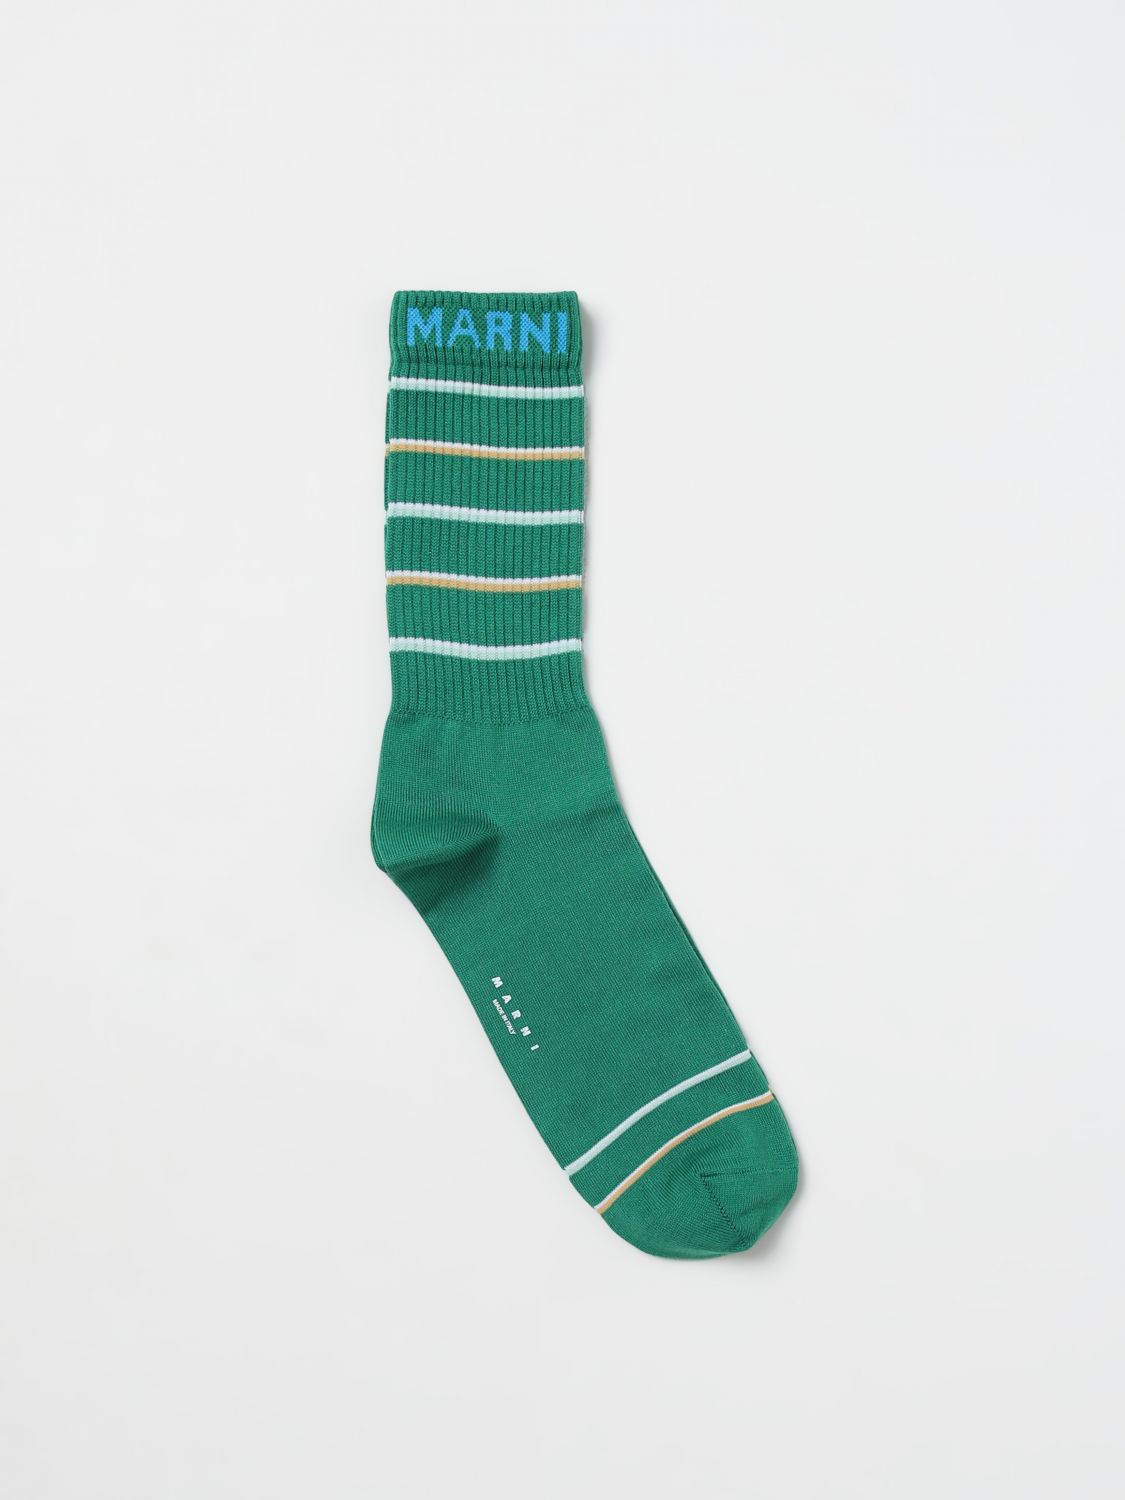 Marni Socks MARNI Men color Water